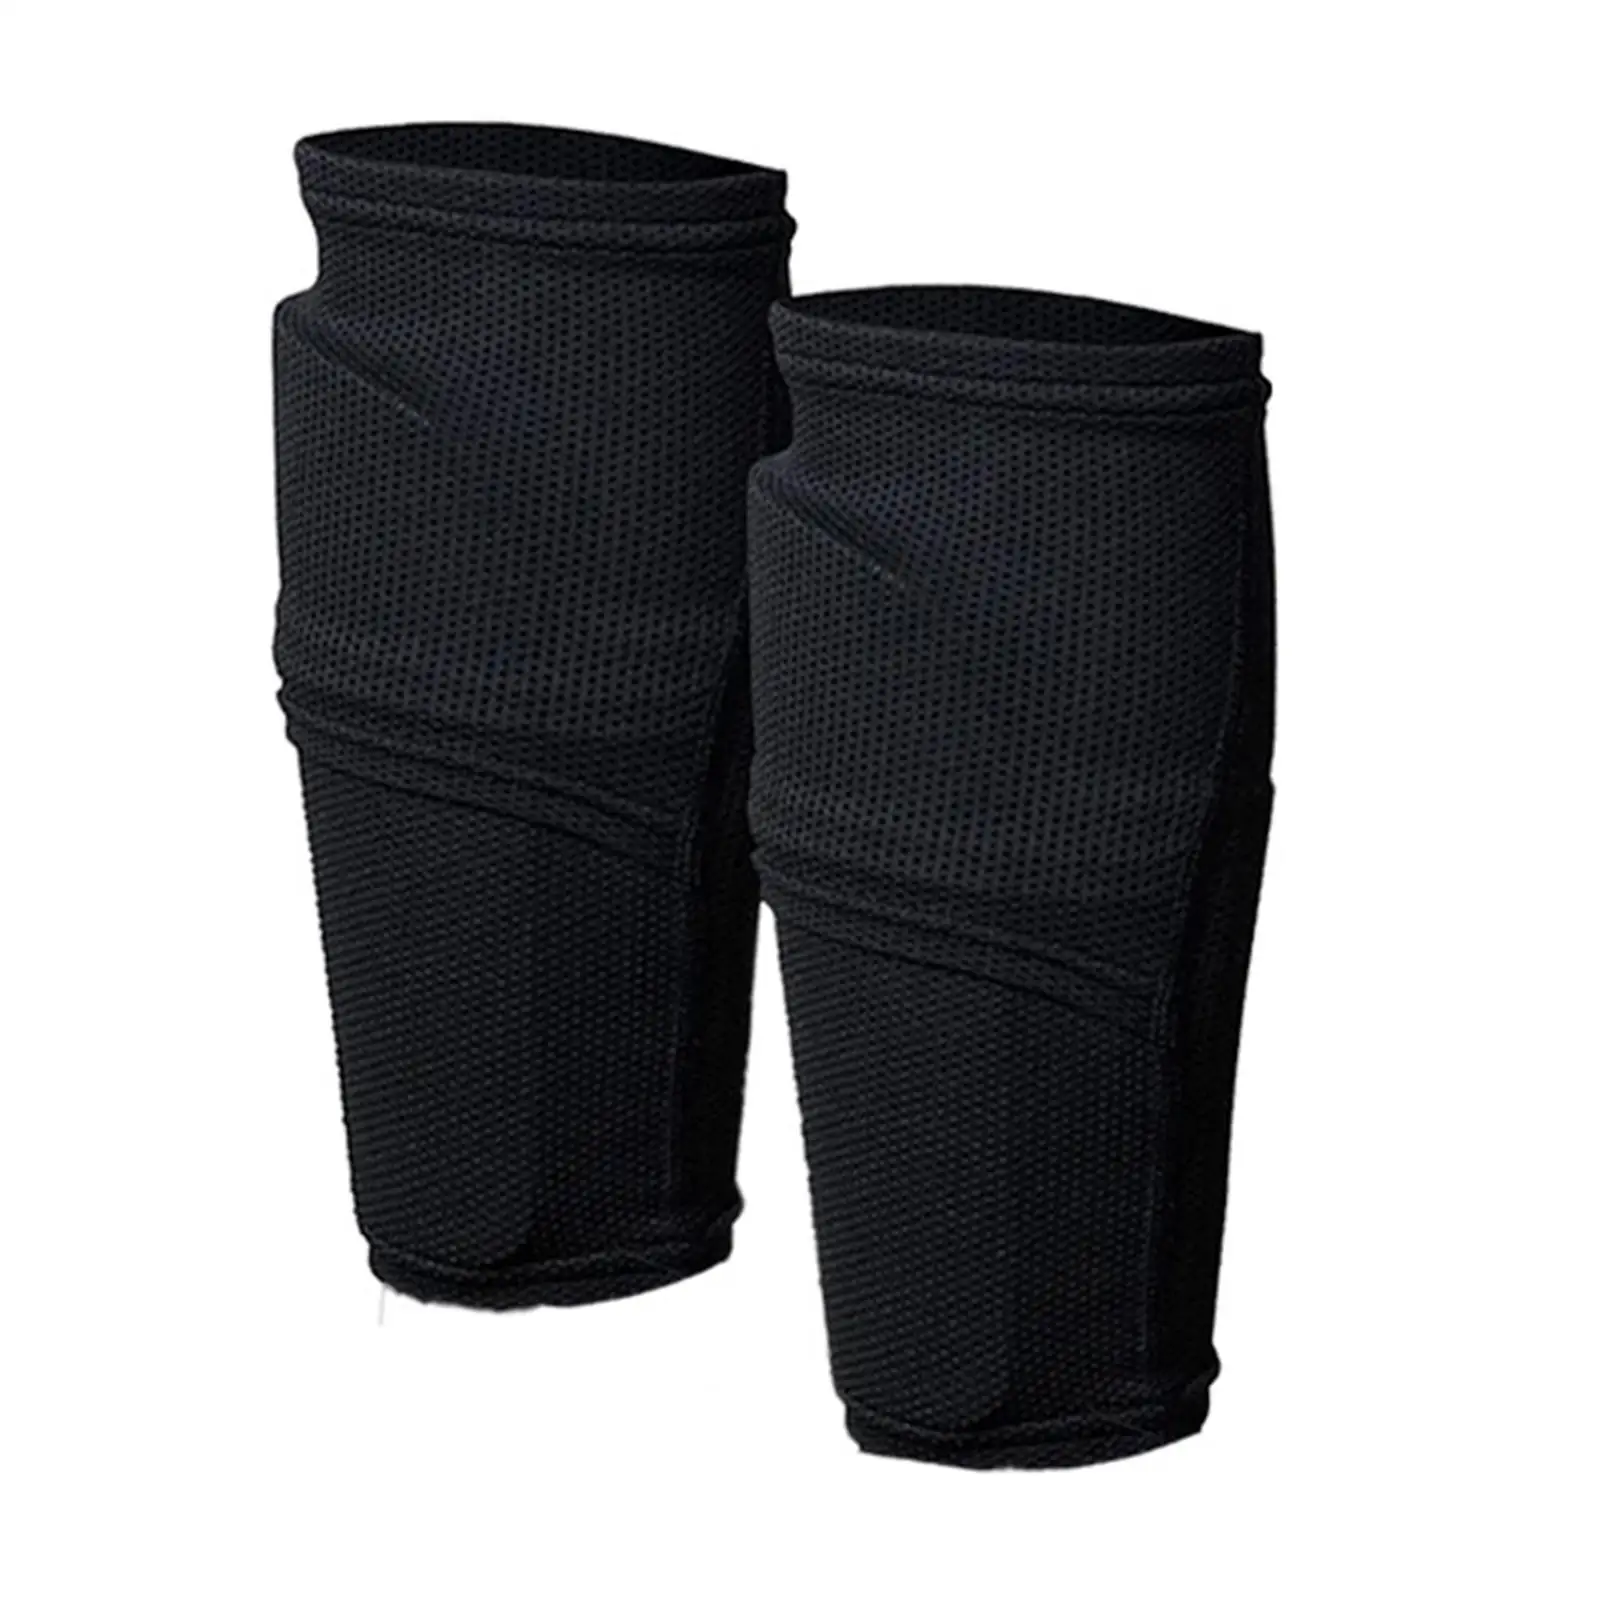 Shin Guard Sleeves Warm AntiSlip Support Protection Soccer Shin Guard Socks for Running Leisure Sports Kicking Ball Kids Women